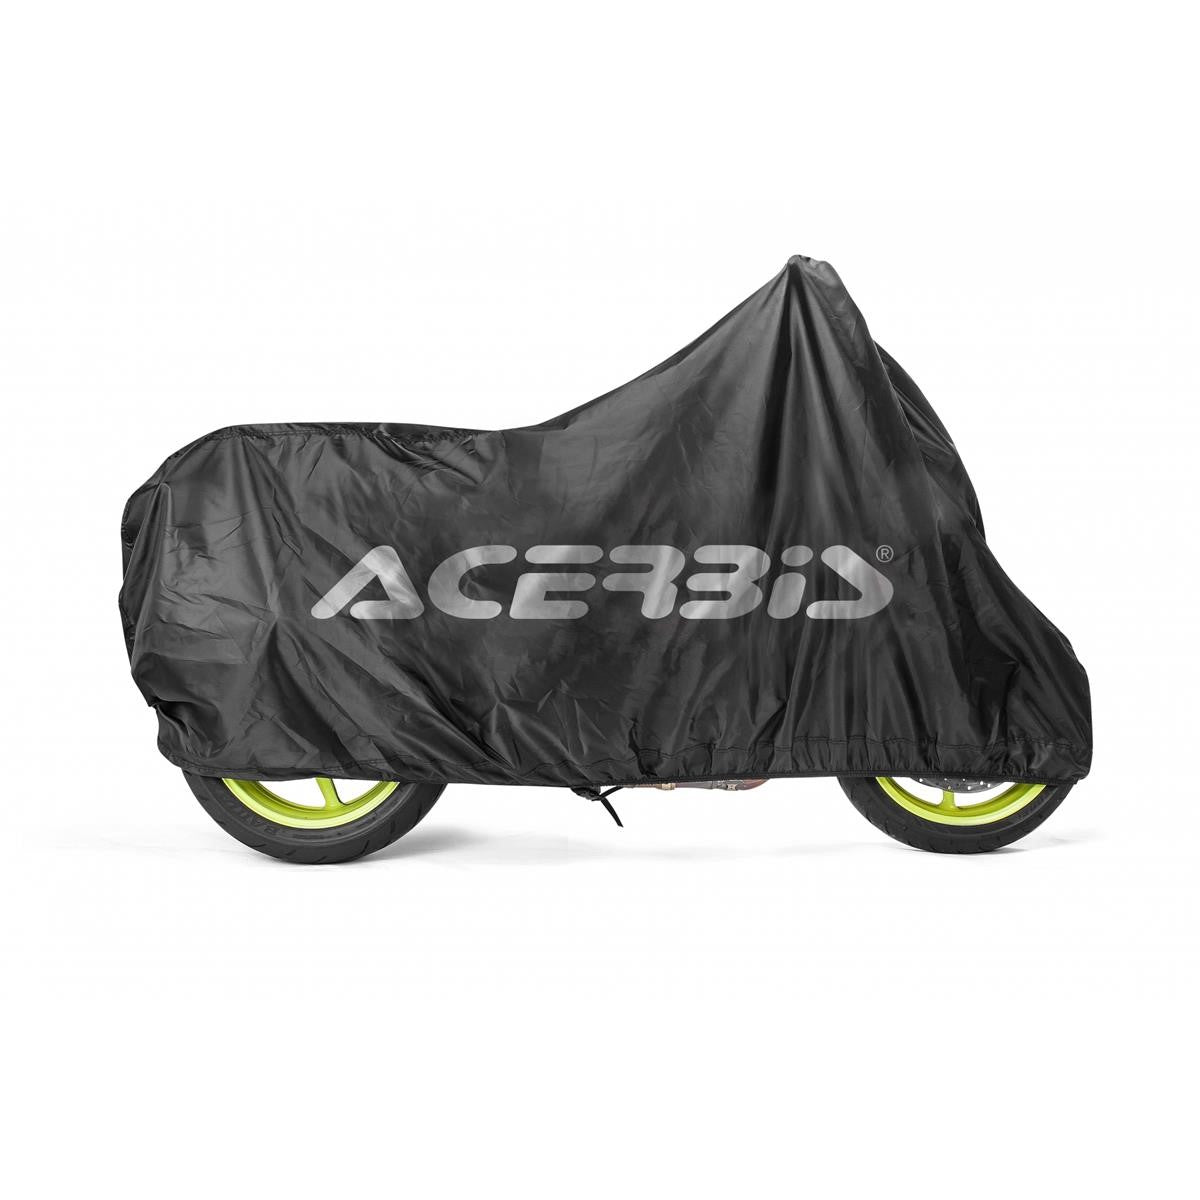 ACERBIS Motorcycle Covers Corporate Black